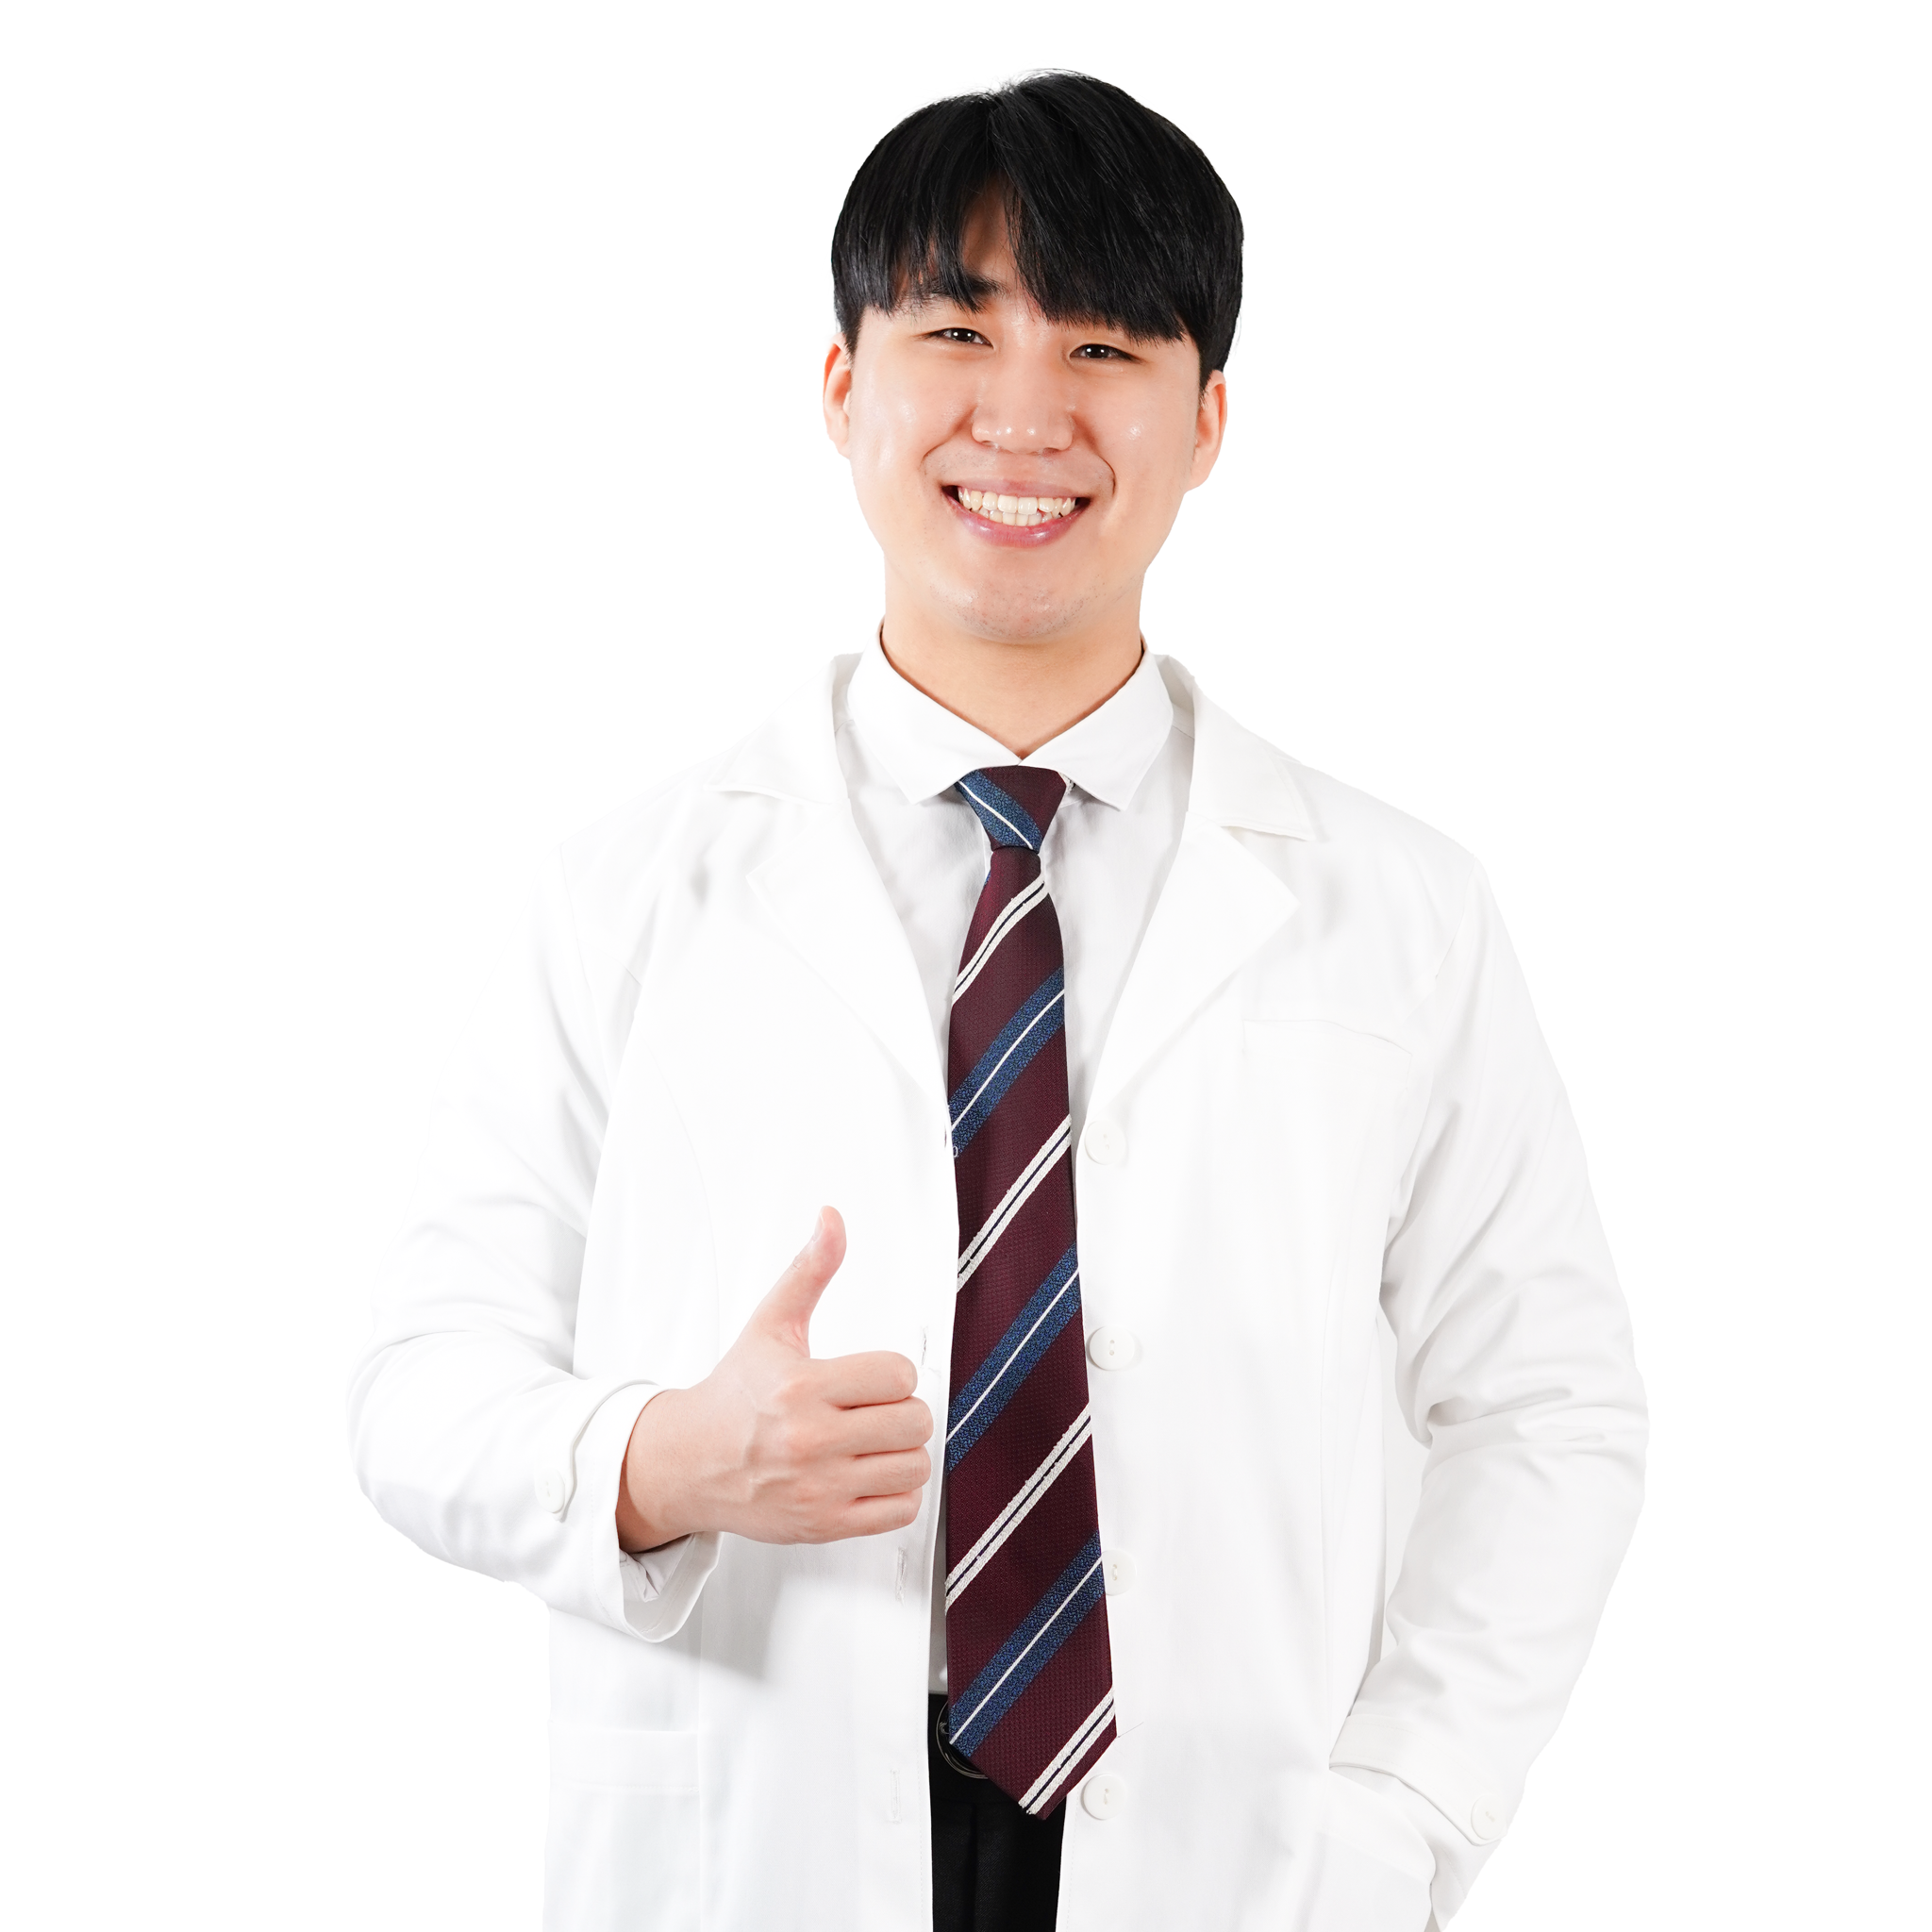 Dr. Joohan Lee